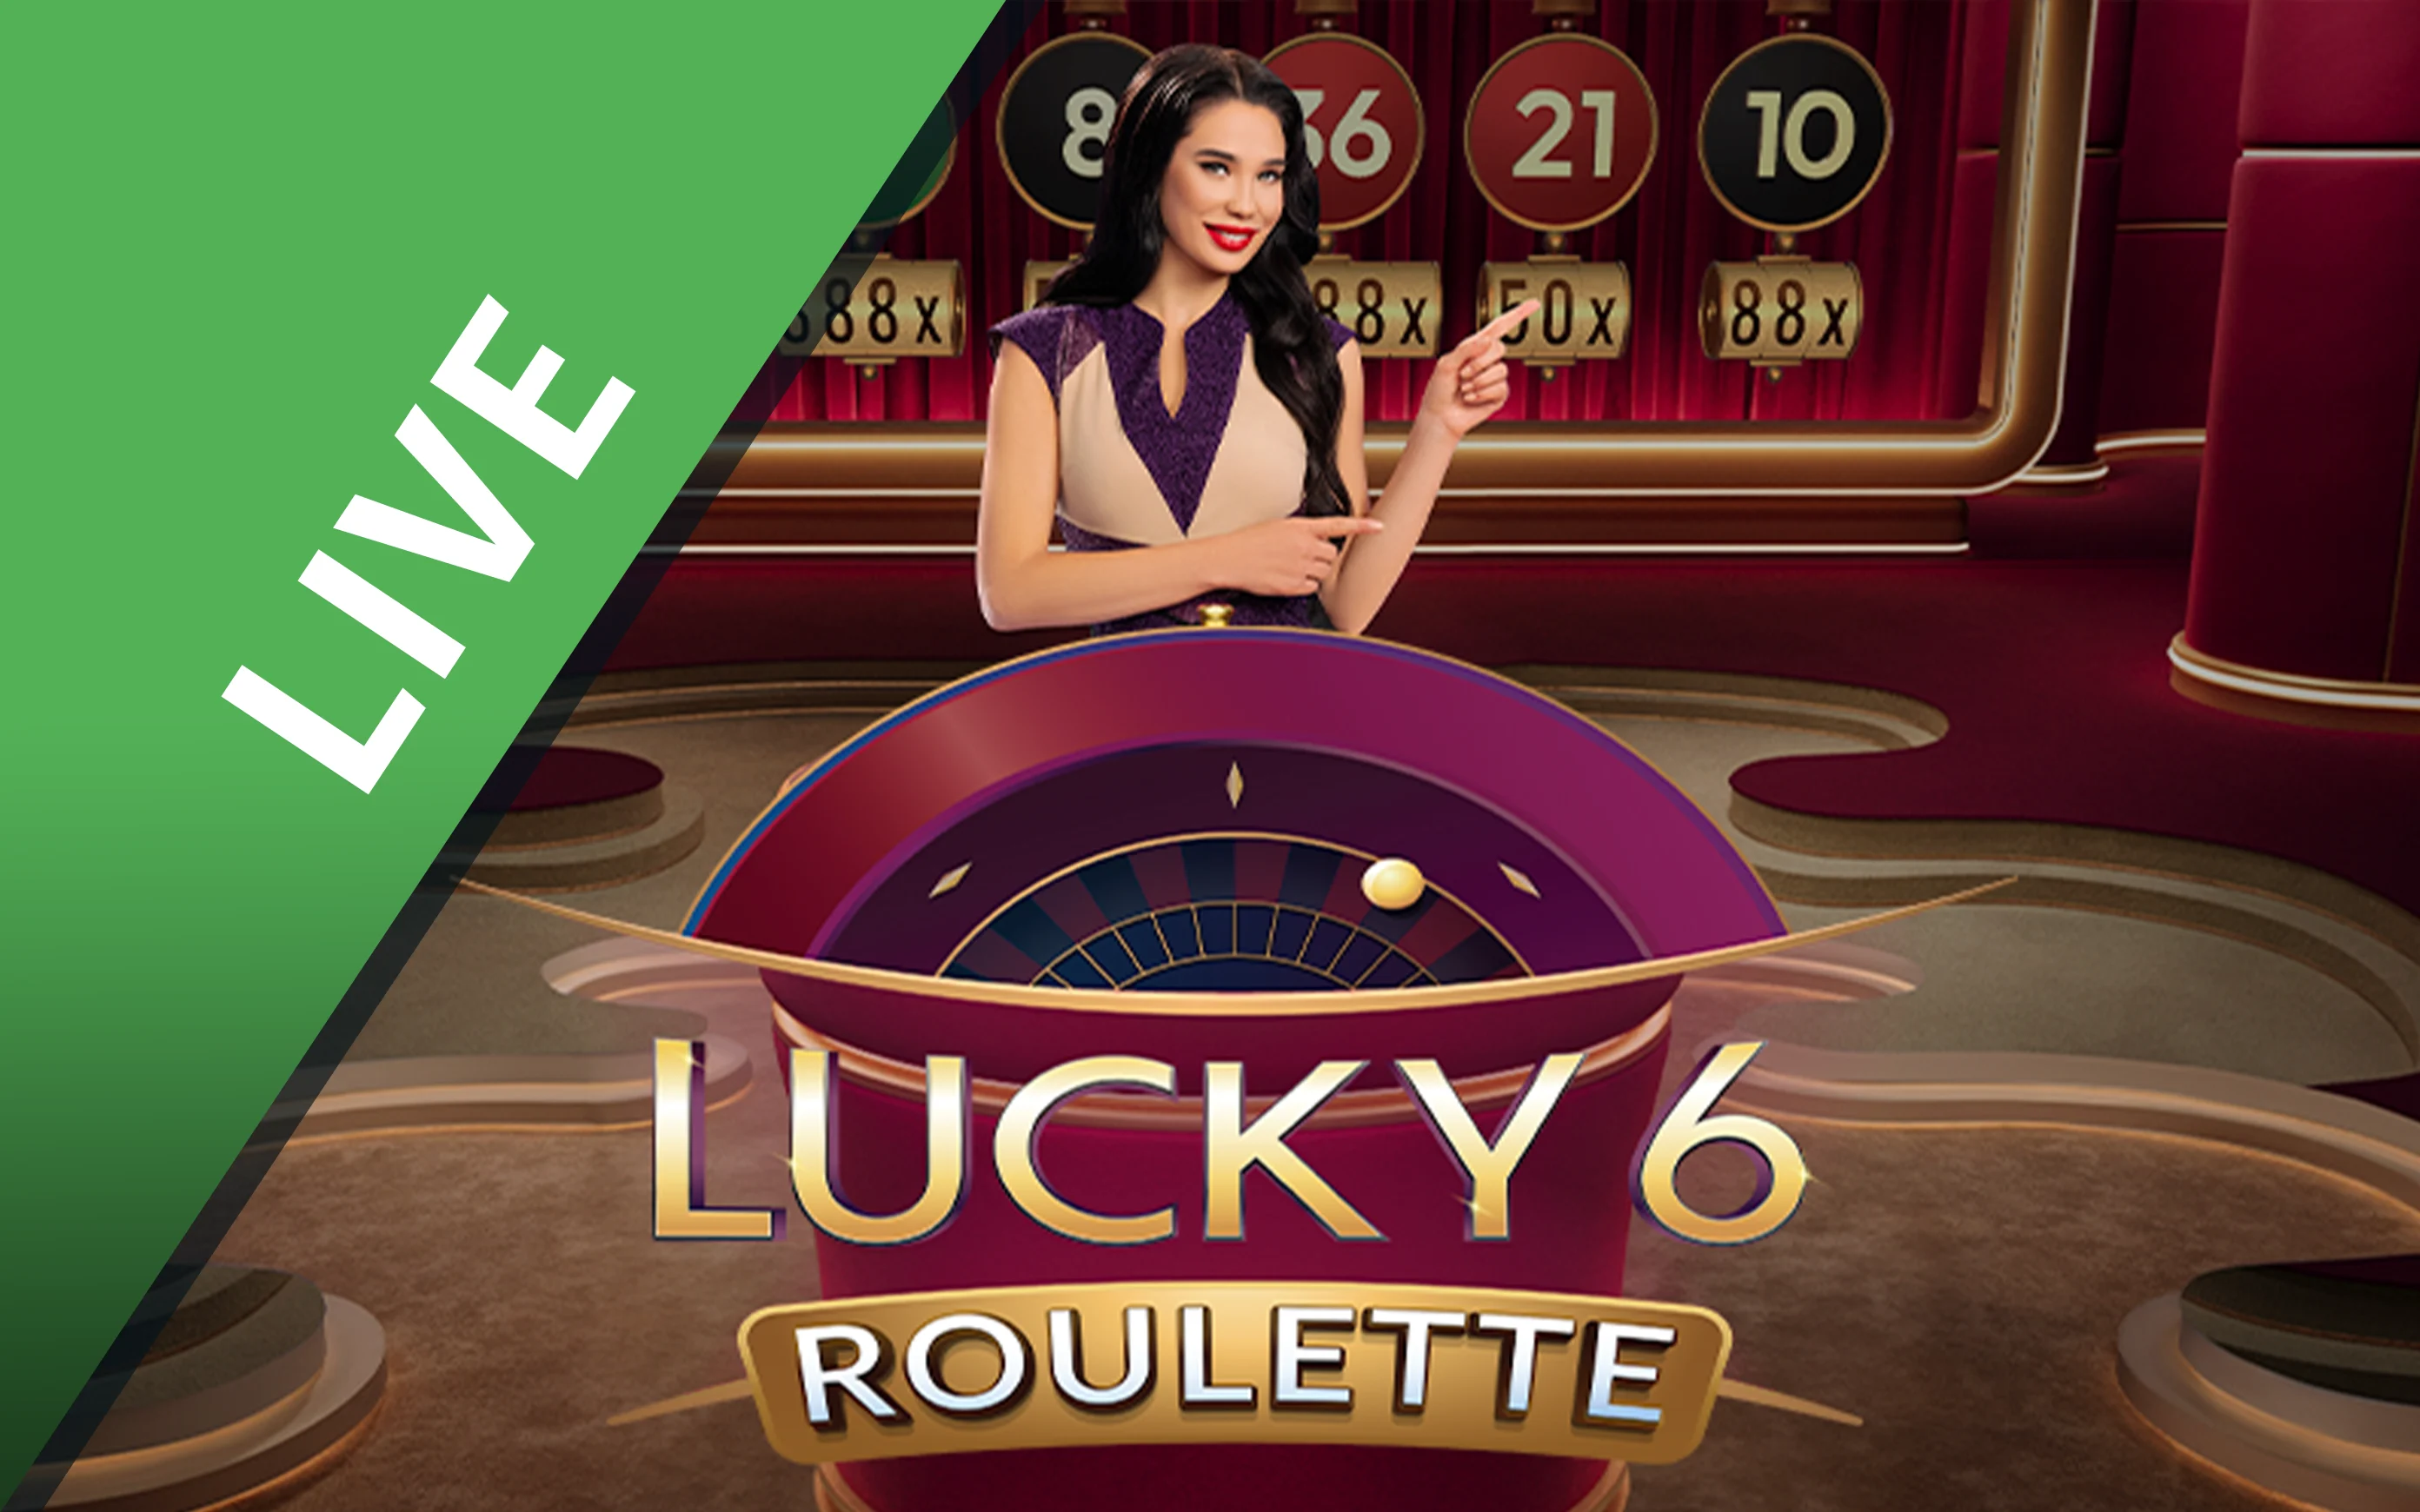 Грайте у Lucky 6 Roulette™ в онлайн-казино Starcasino.be